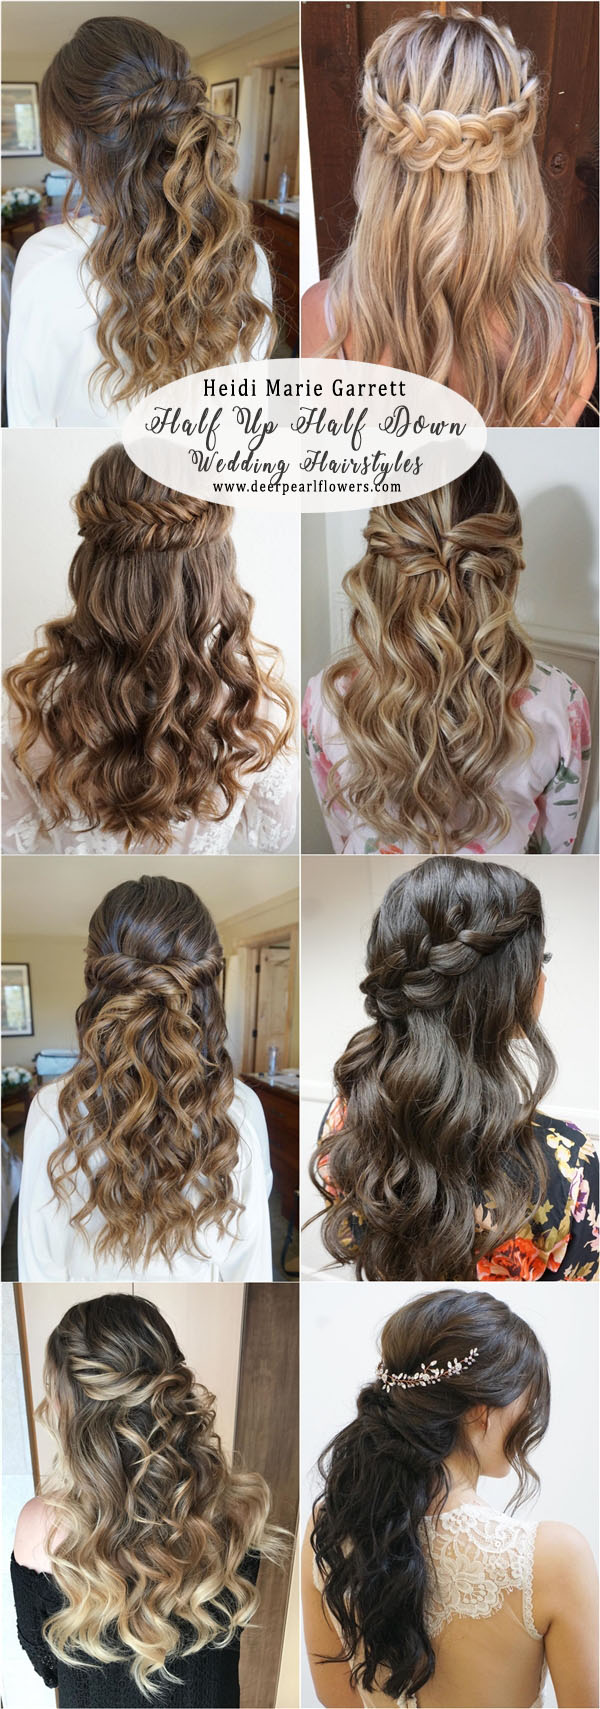 Half up half down wedding hairstyles via Heidi Marie Garrett